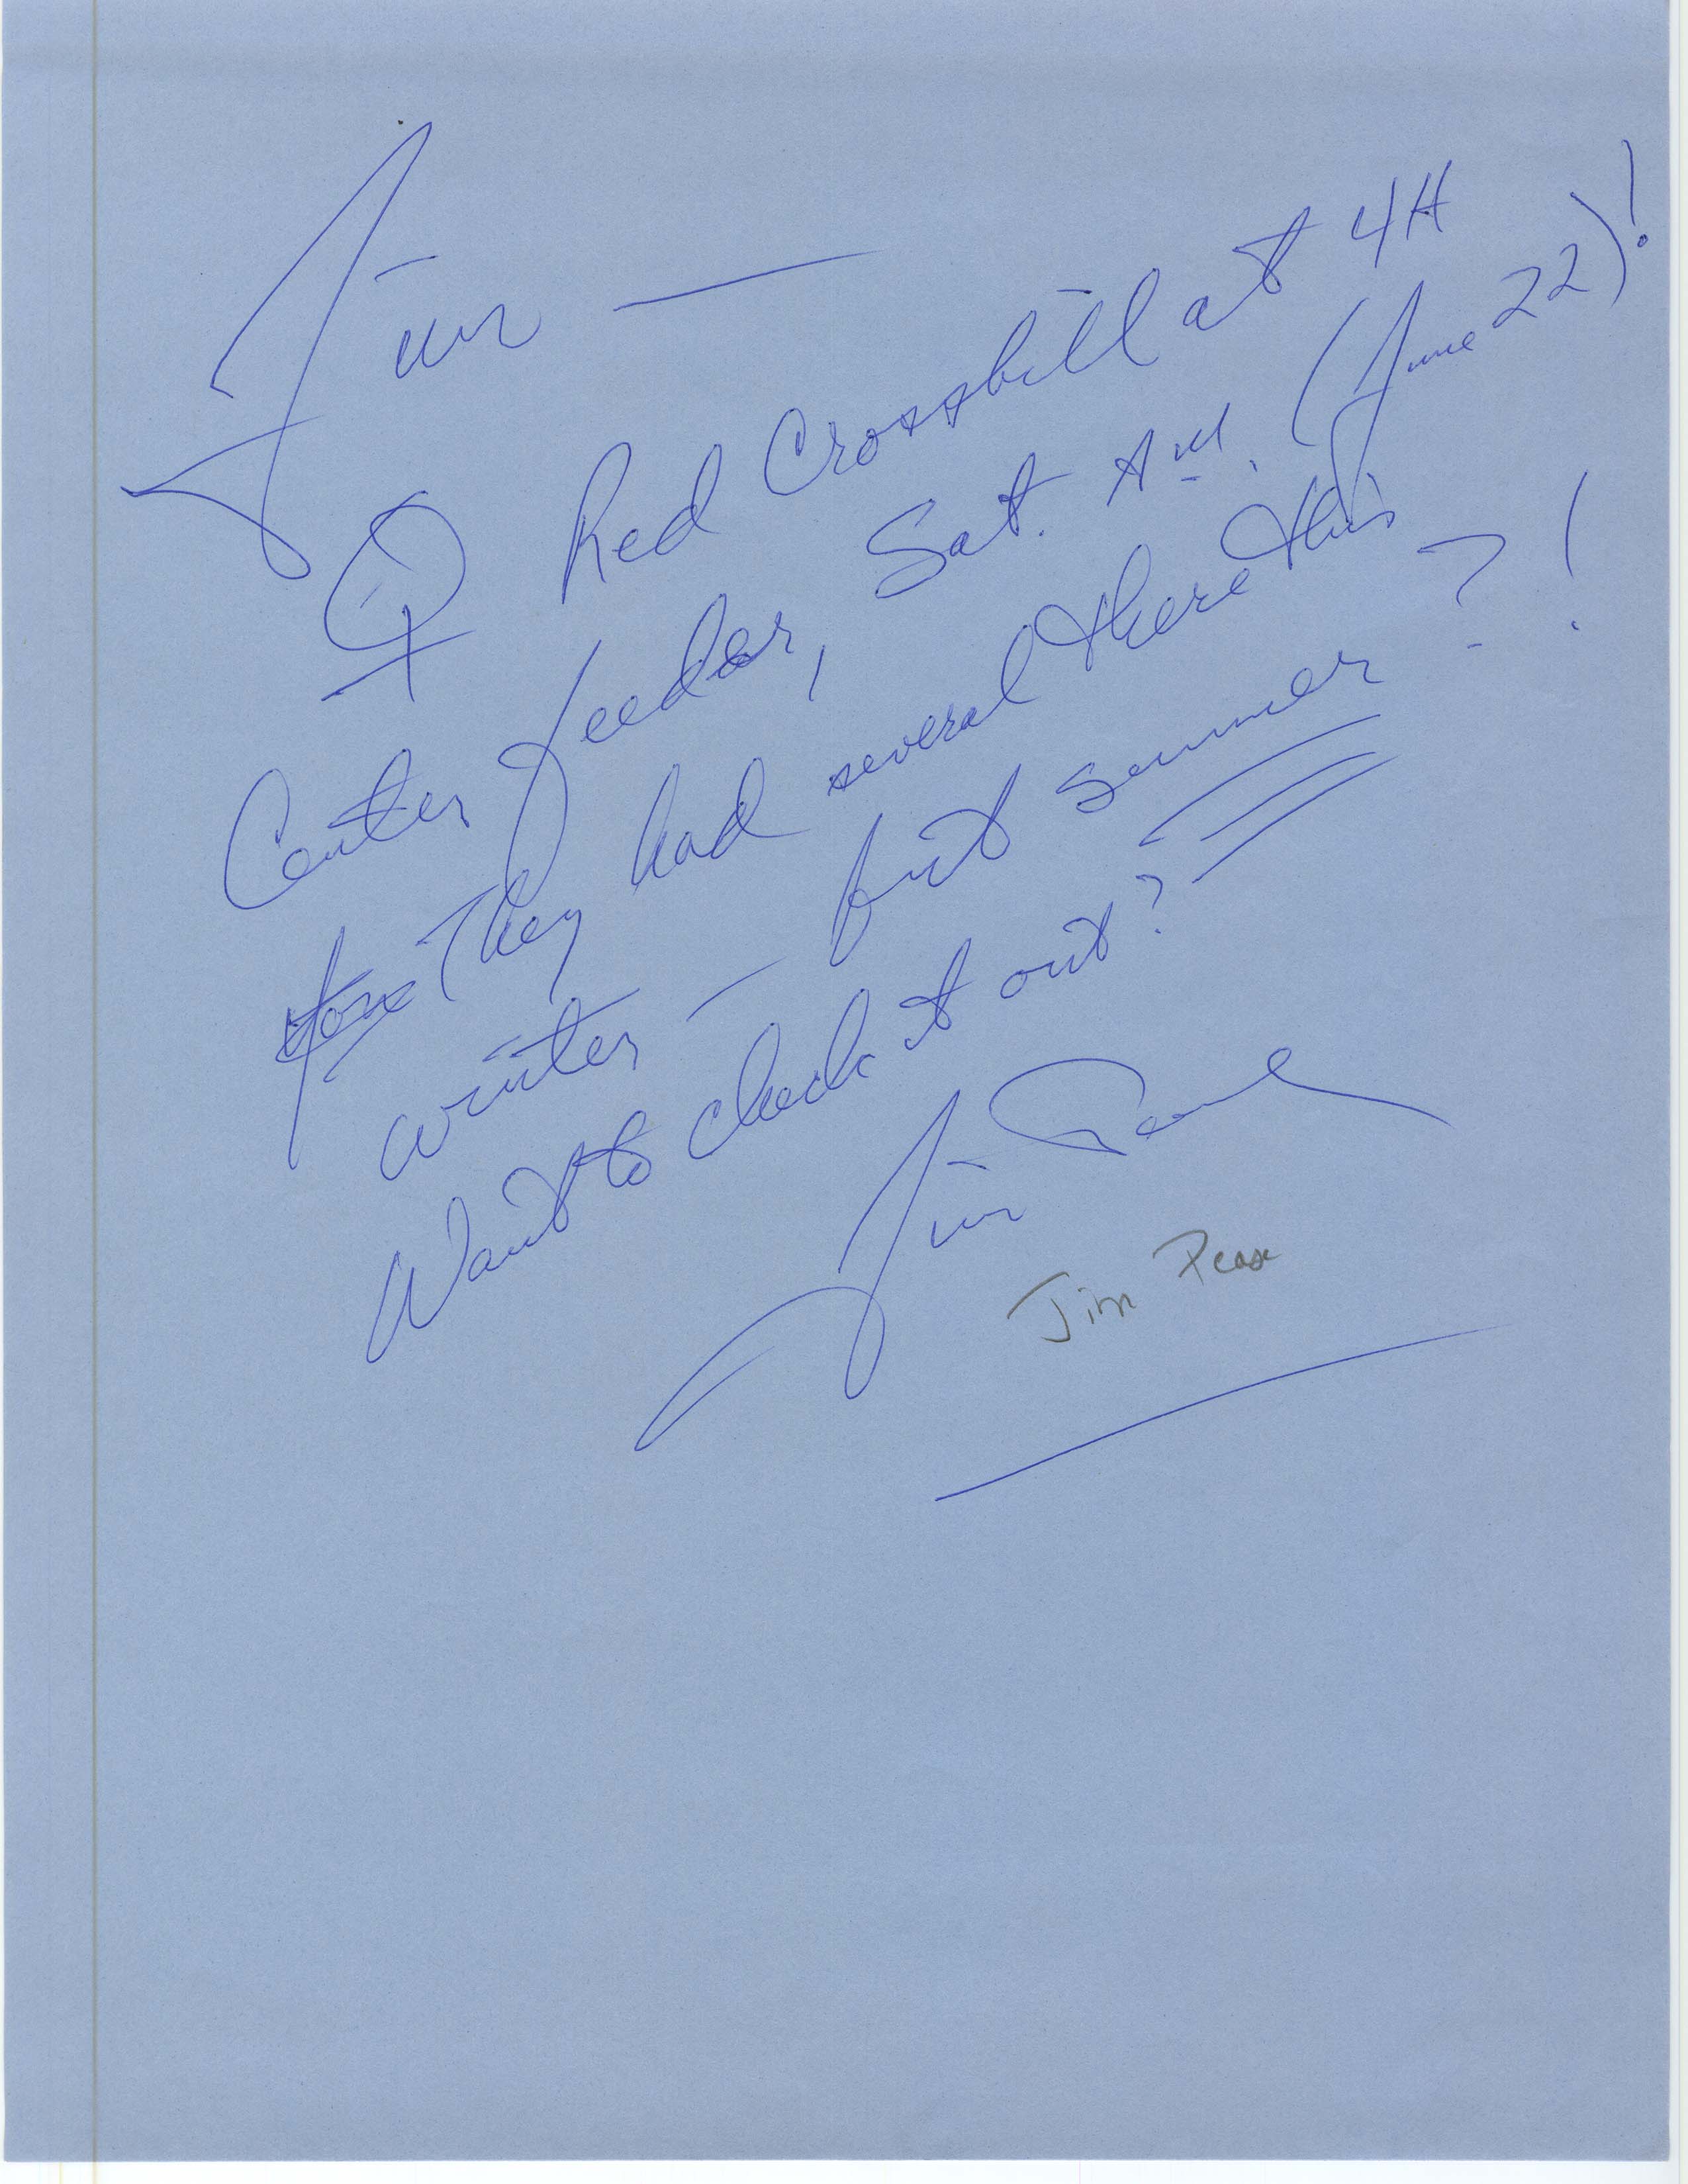 Jim Pease letter to James J. Dinsmore regarding bird sightings, June 22, 1991